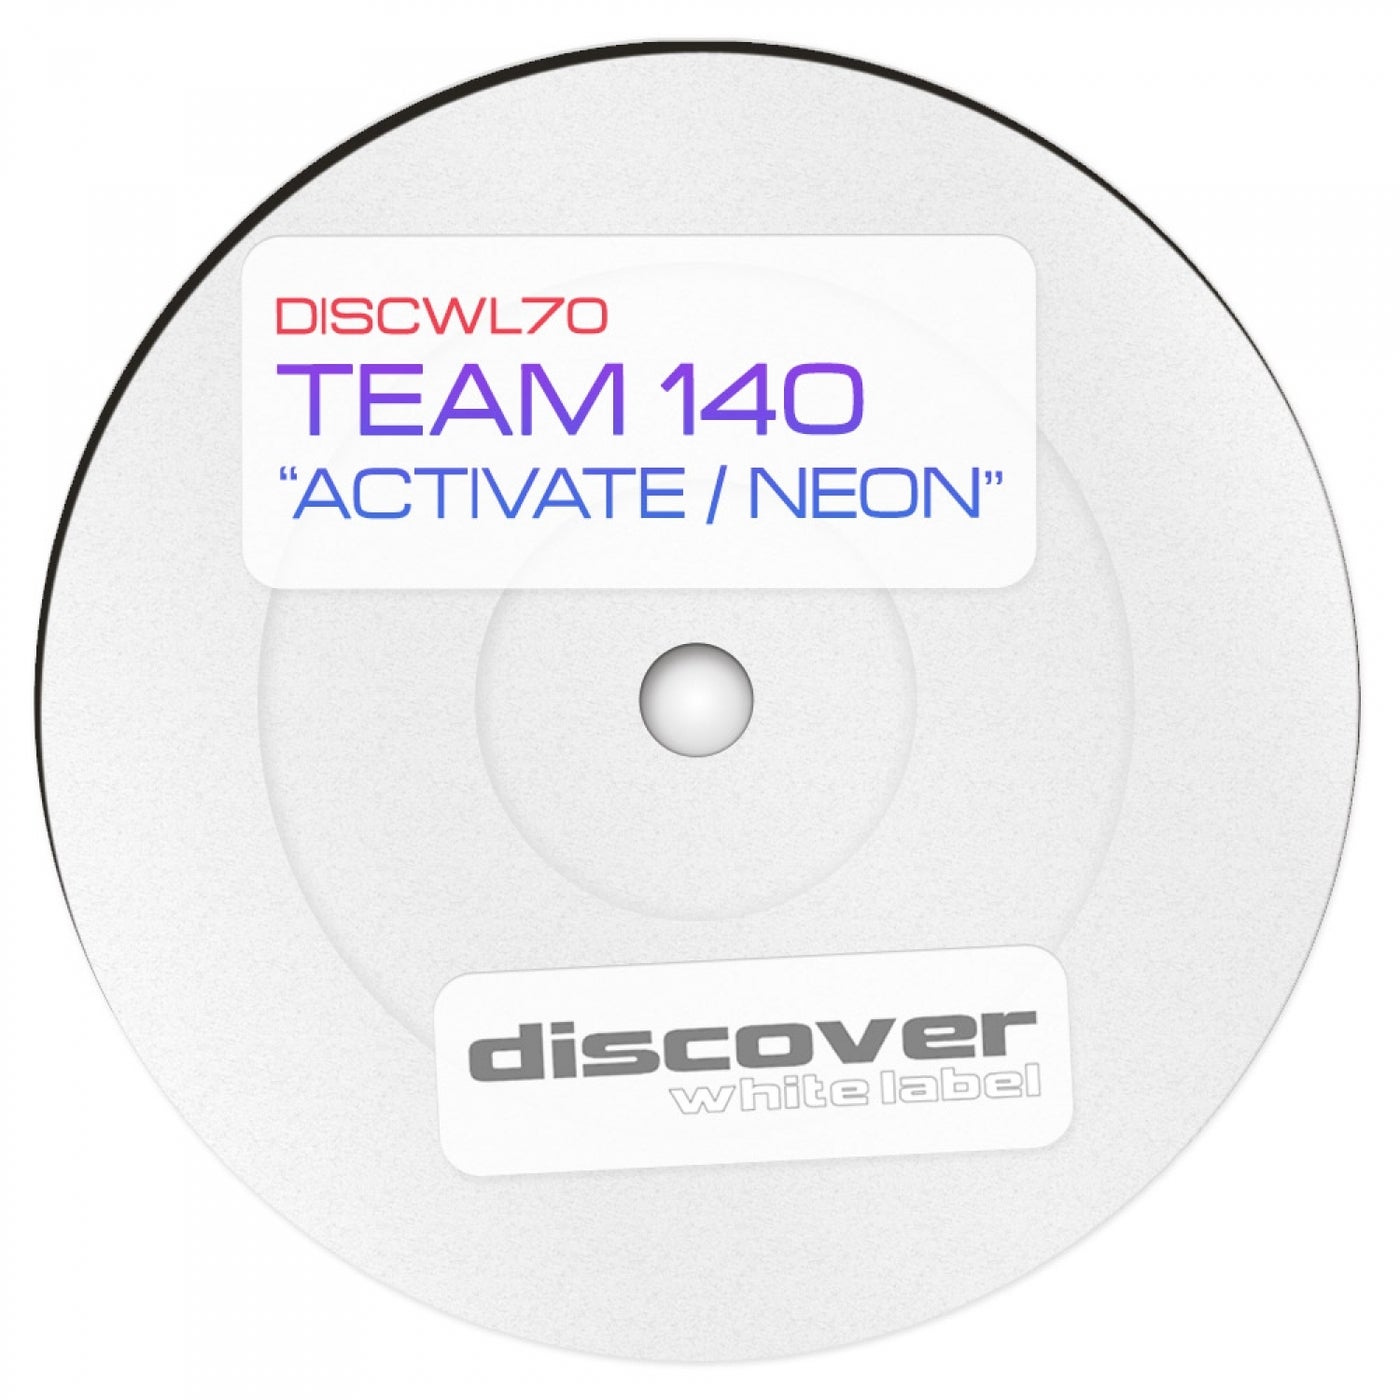 Activate / Neon